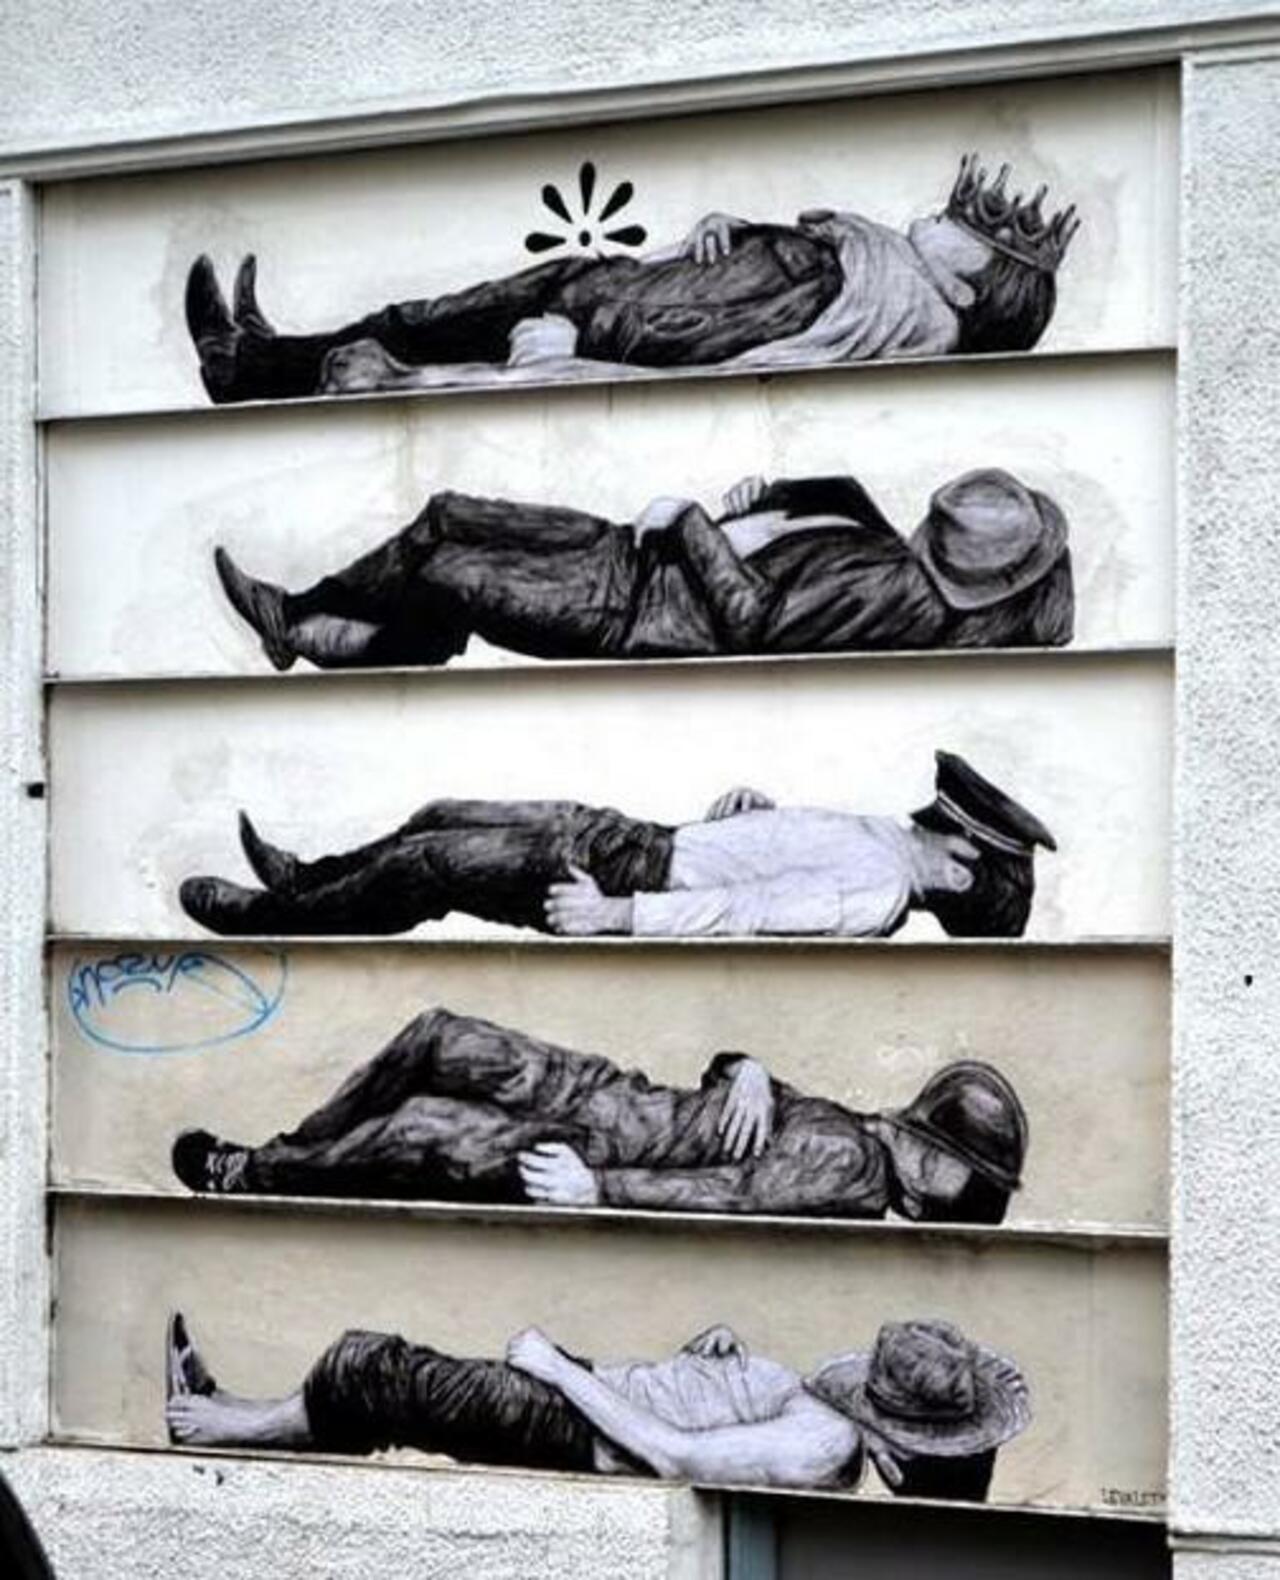 RT @DavidBonnand: L'ordre des choses, 2015
#Paris #France
by #Levalet ()
#streetart #graffiti #art http://t.co/2k6UIaKyAx